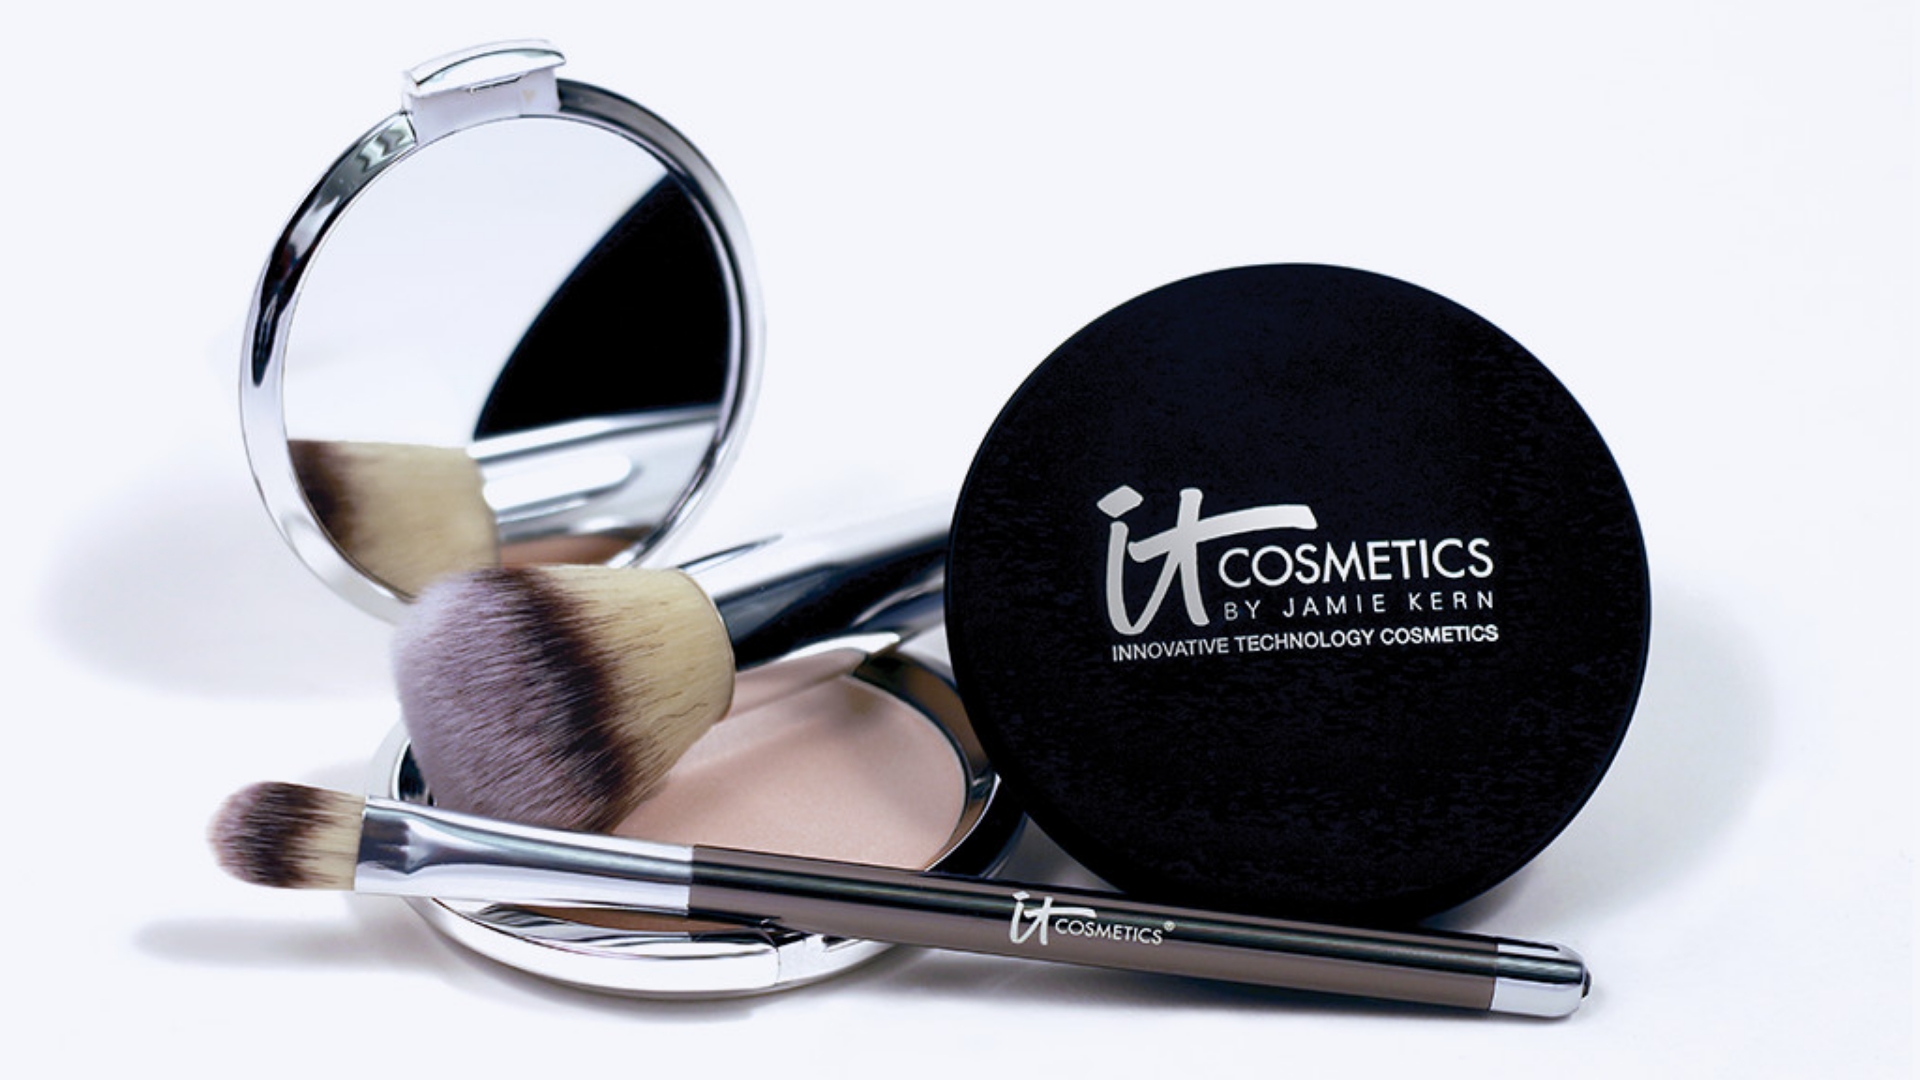 IT Cosmetics Compact Case